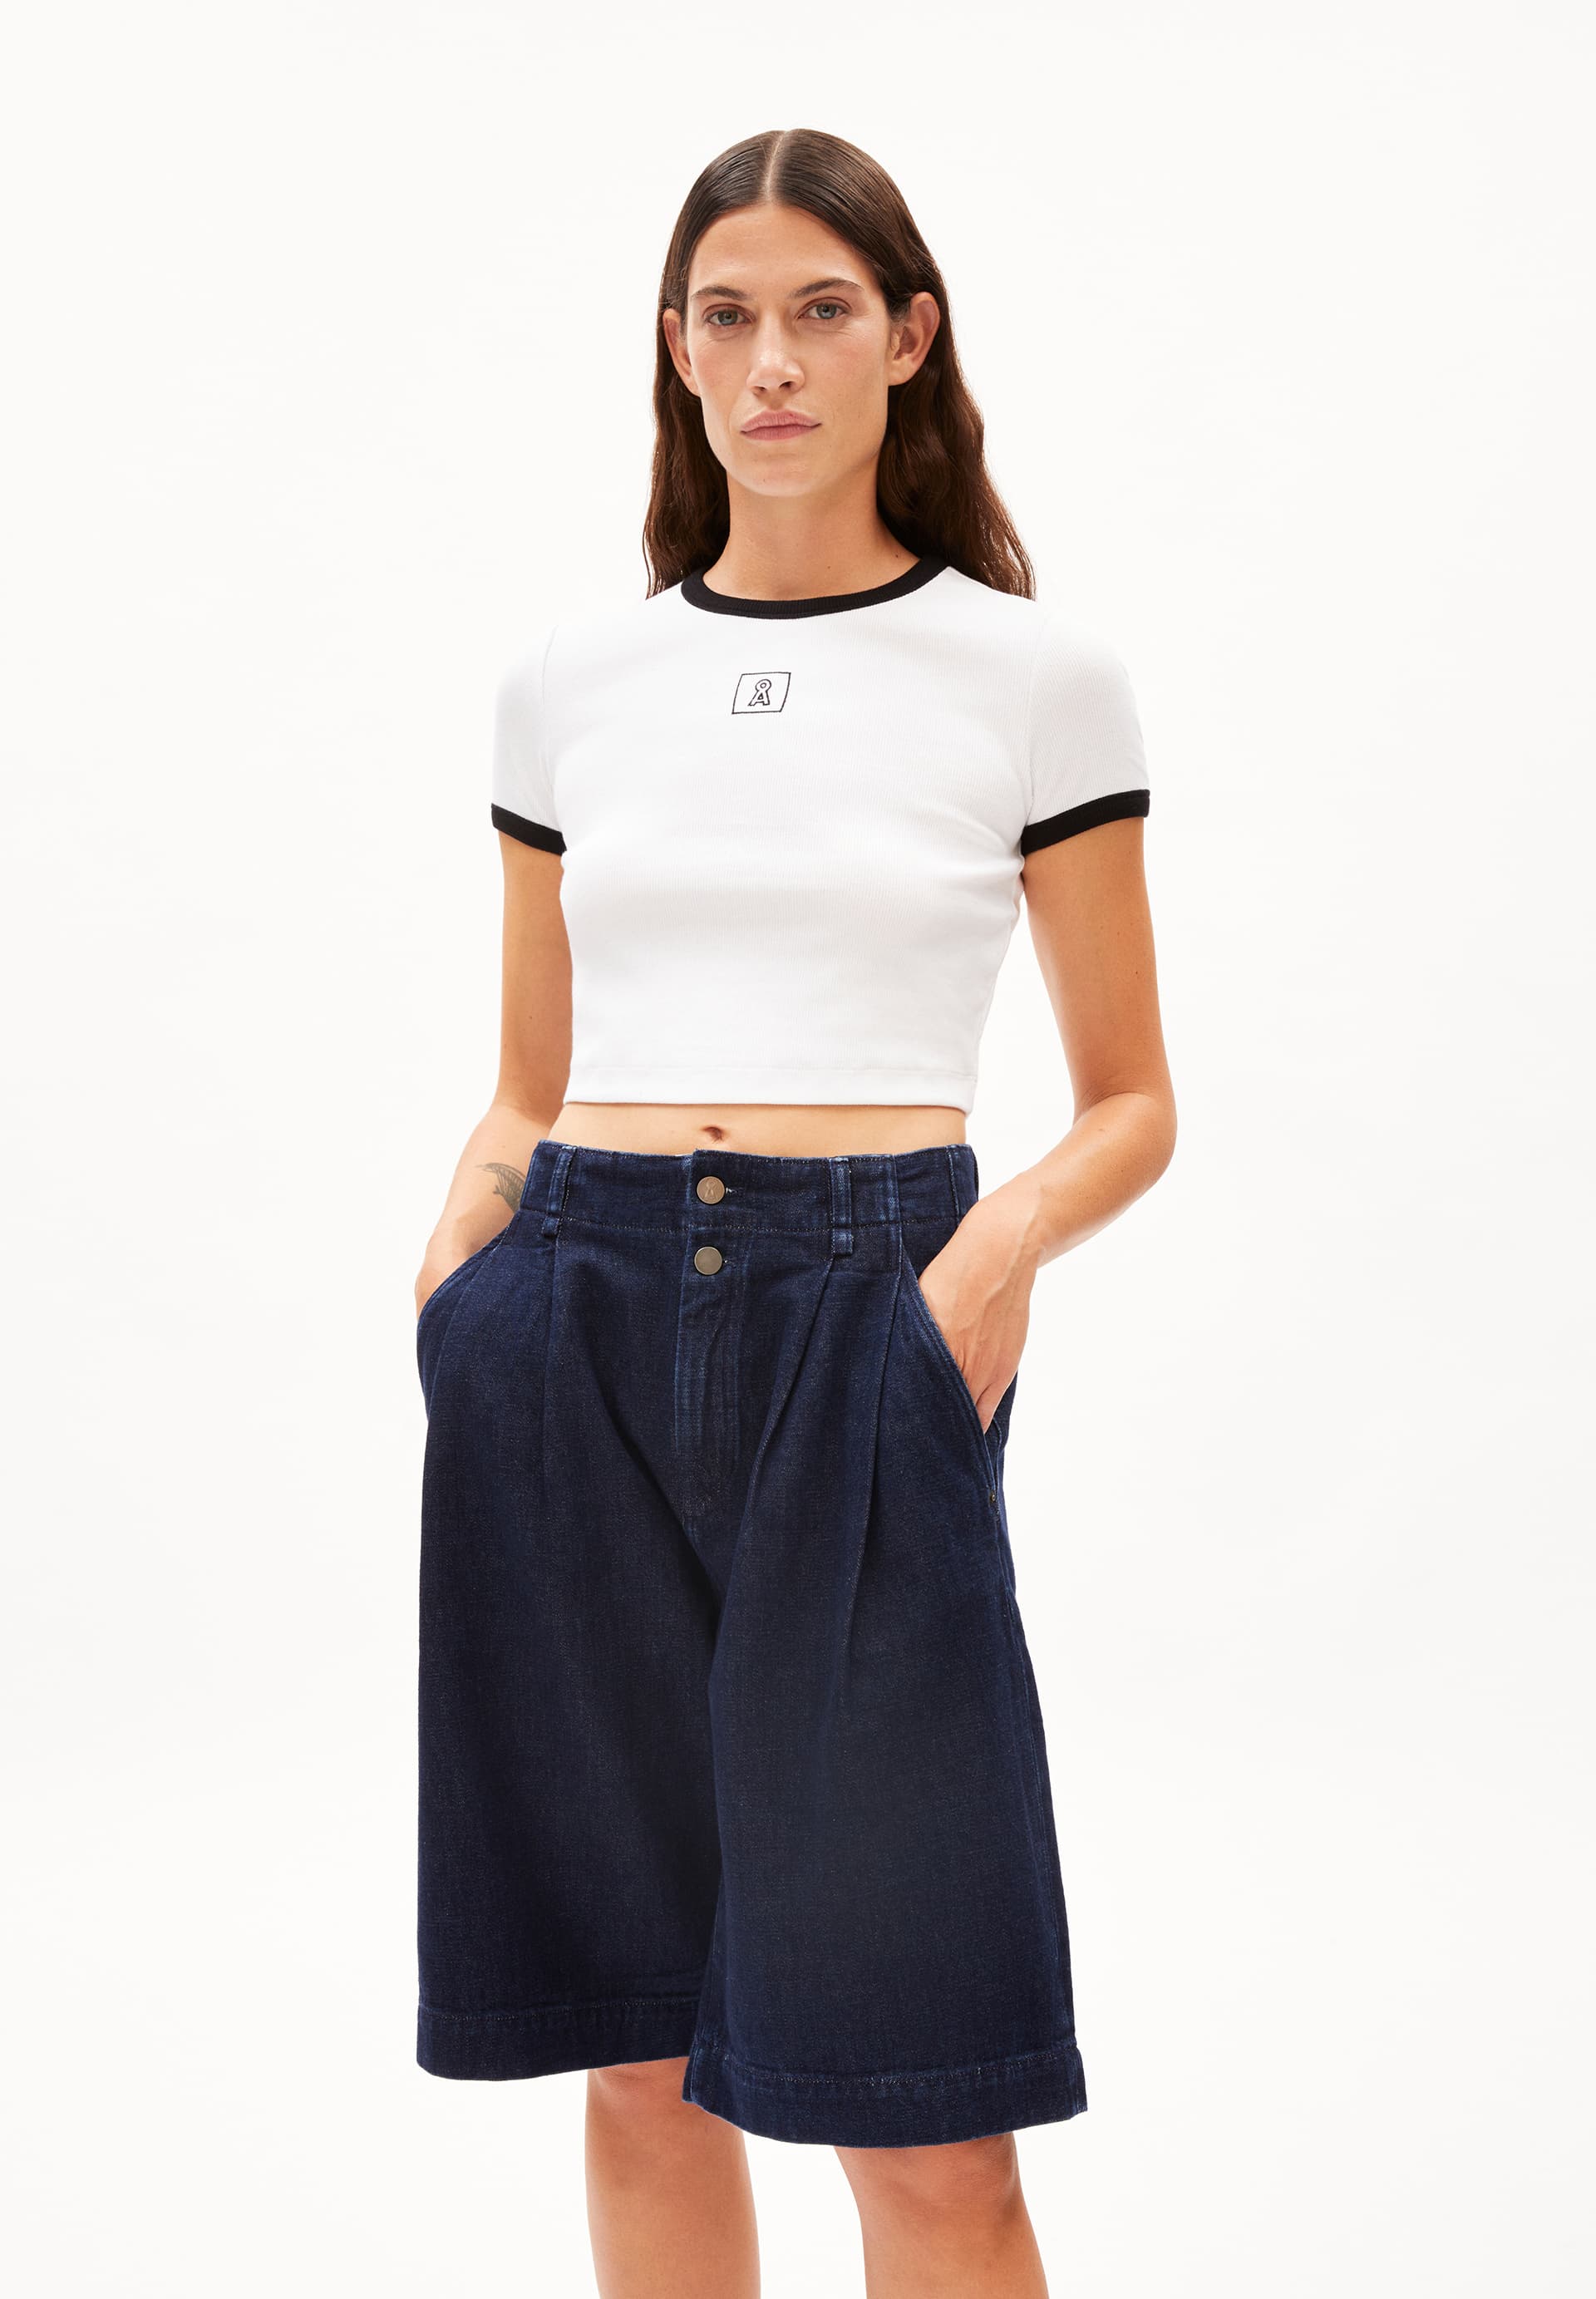 KARDITAA CONTRAST Rib-T-Shirt Slim Fit made of Organic Cotton Mix